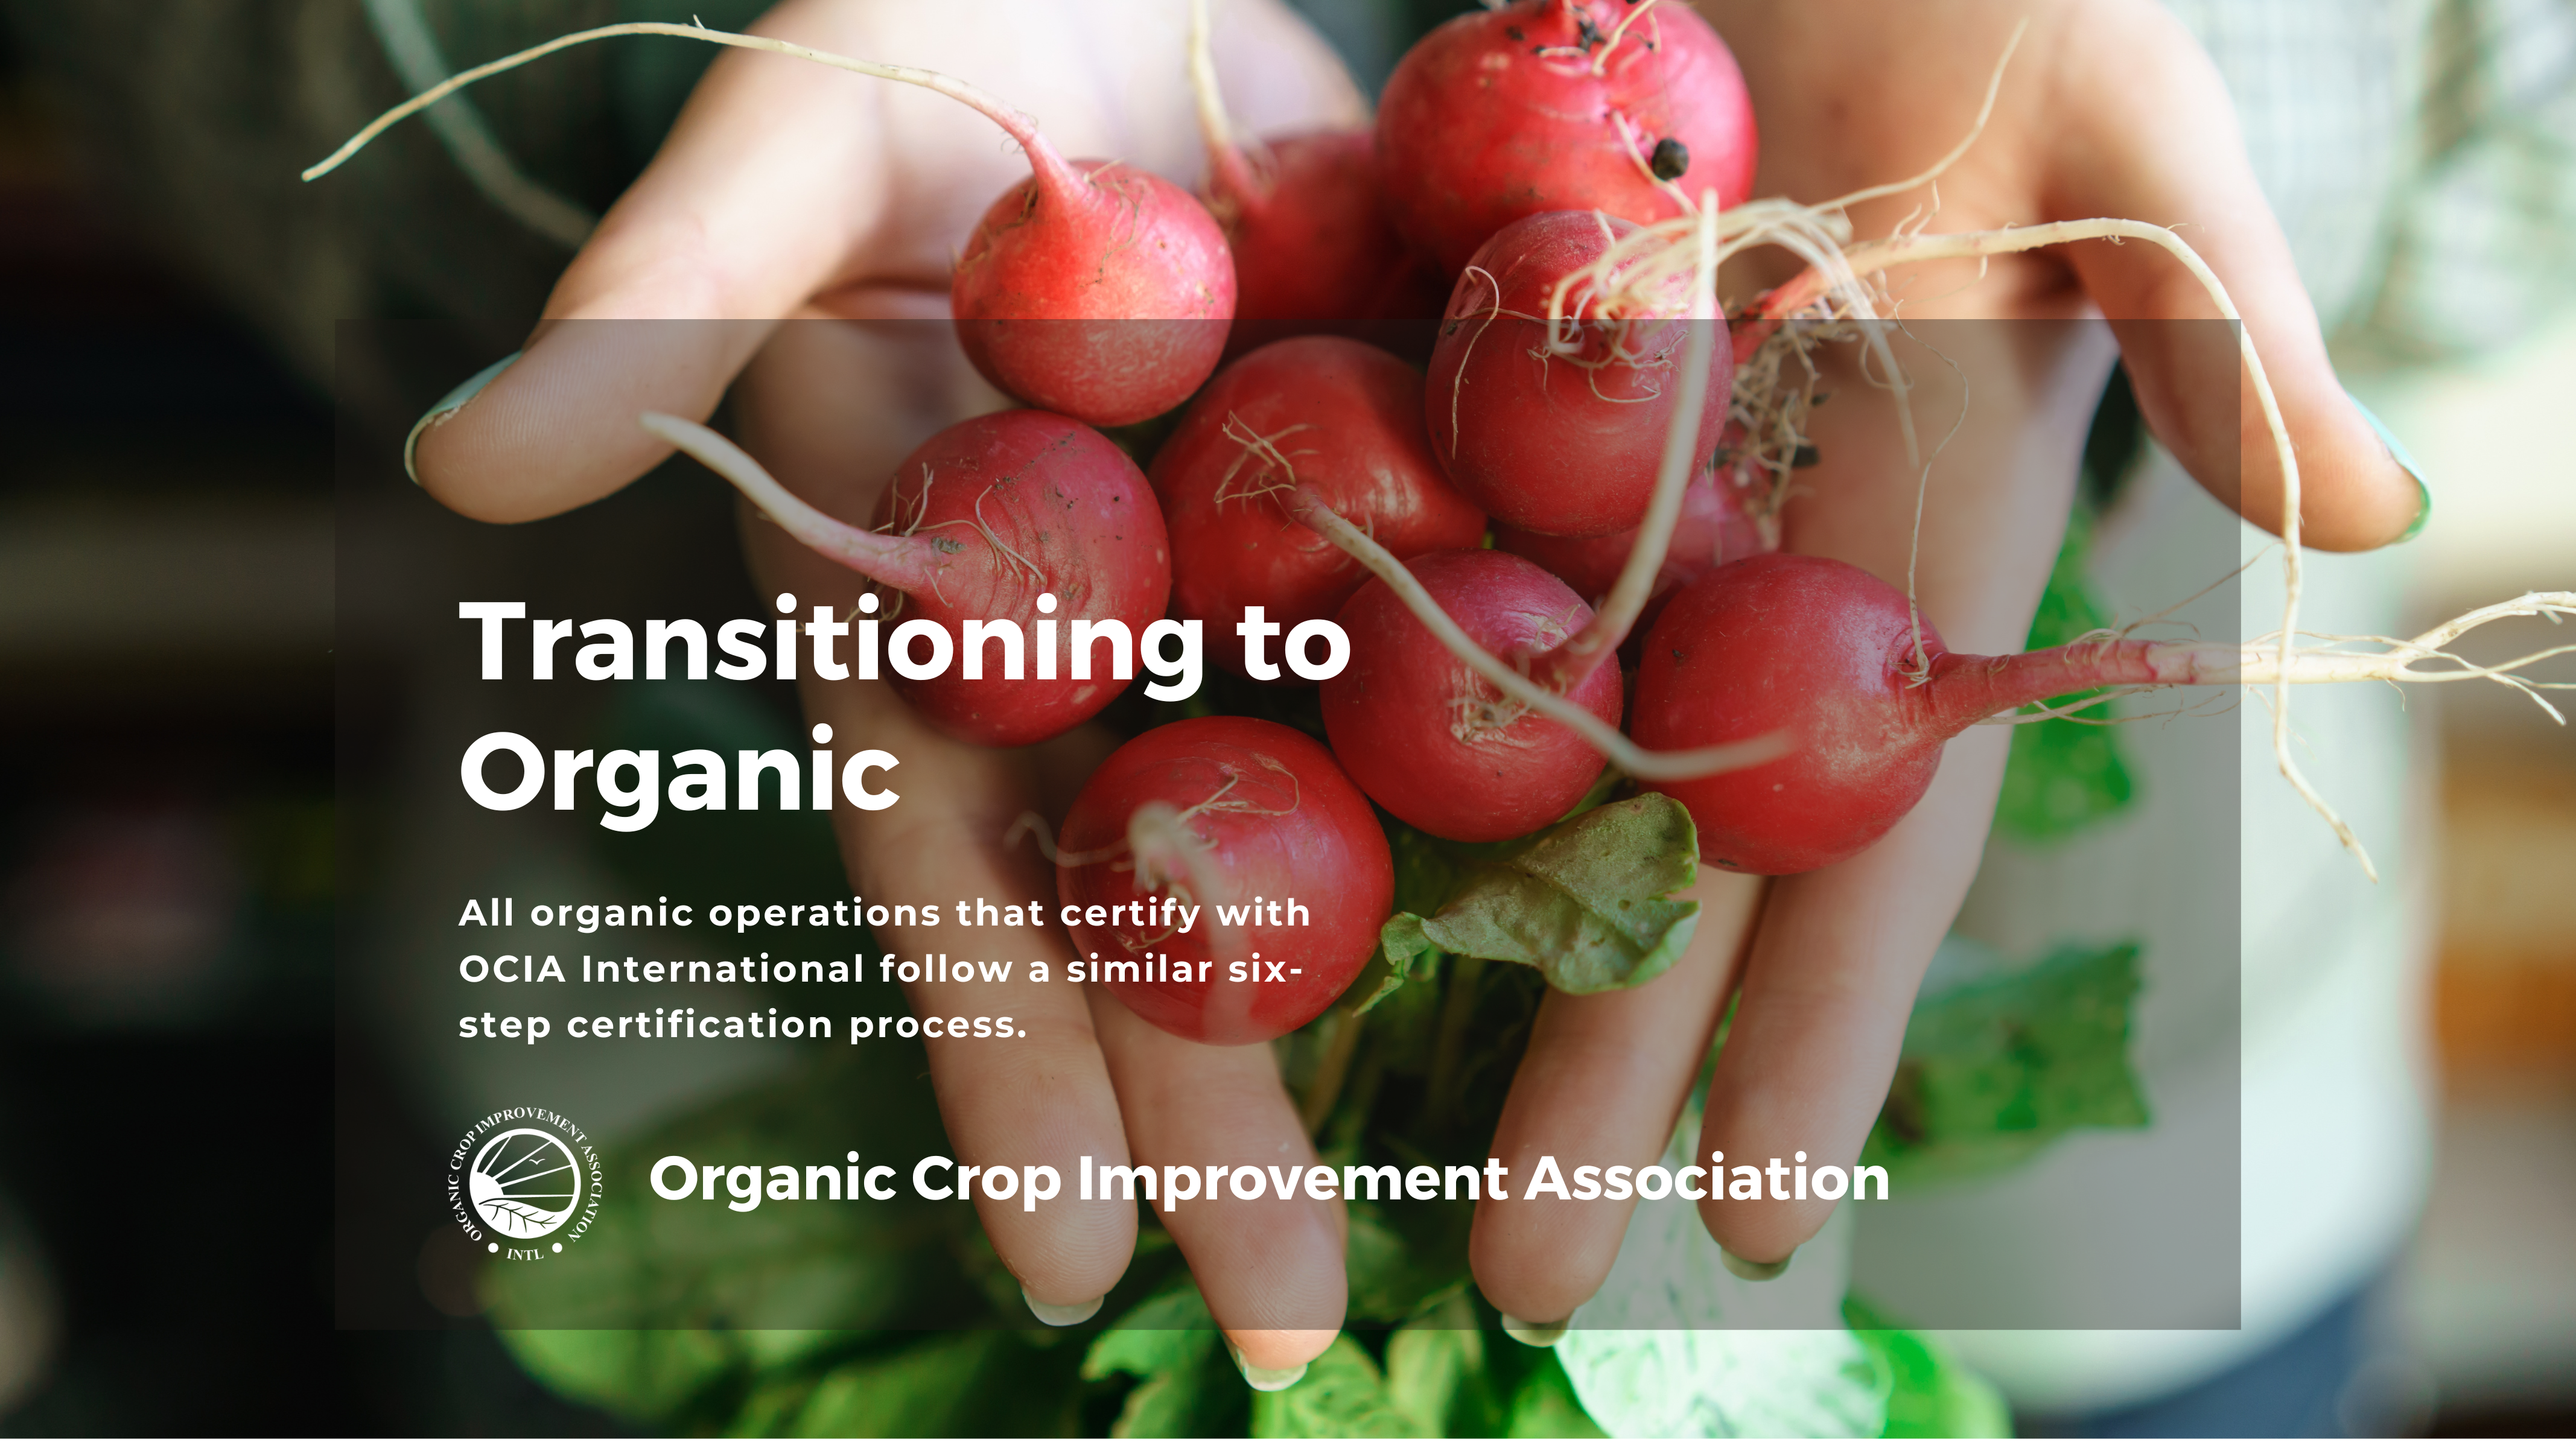 Transition to organic with OCIA International